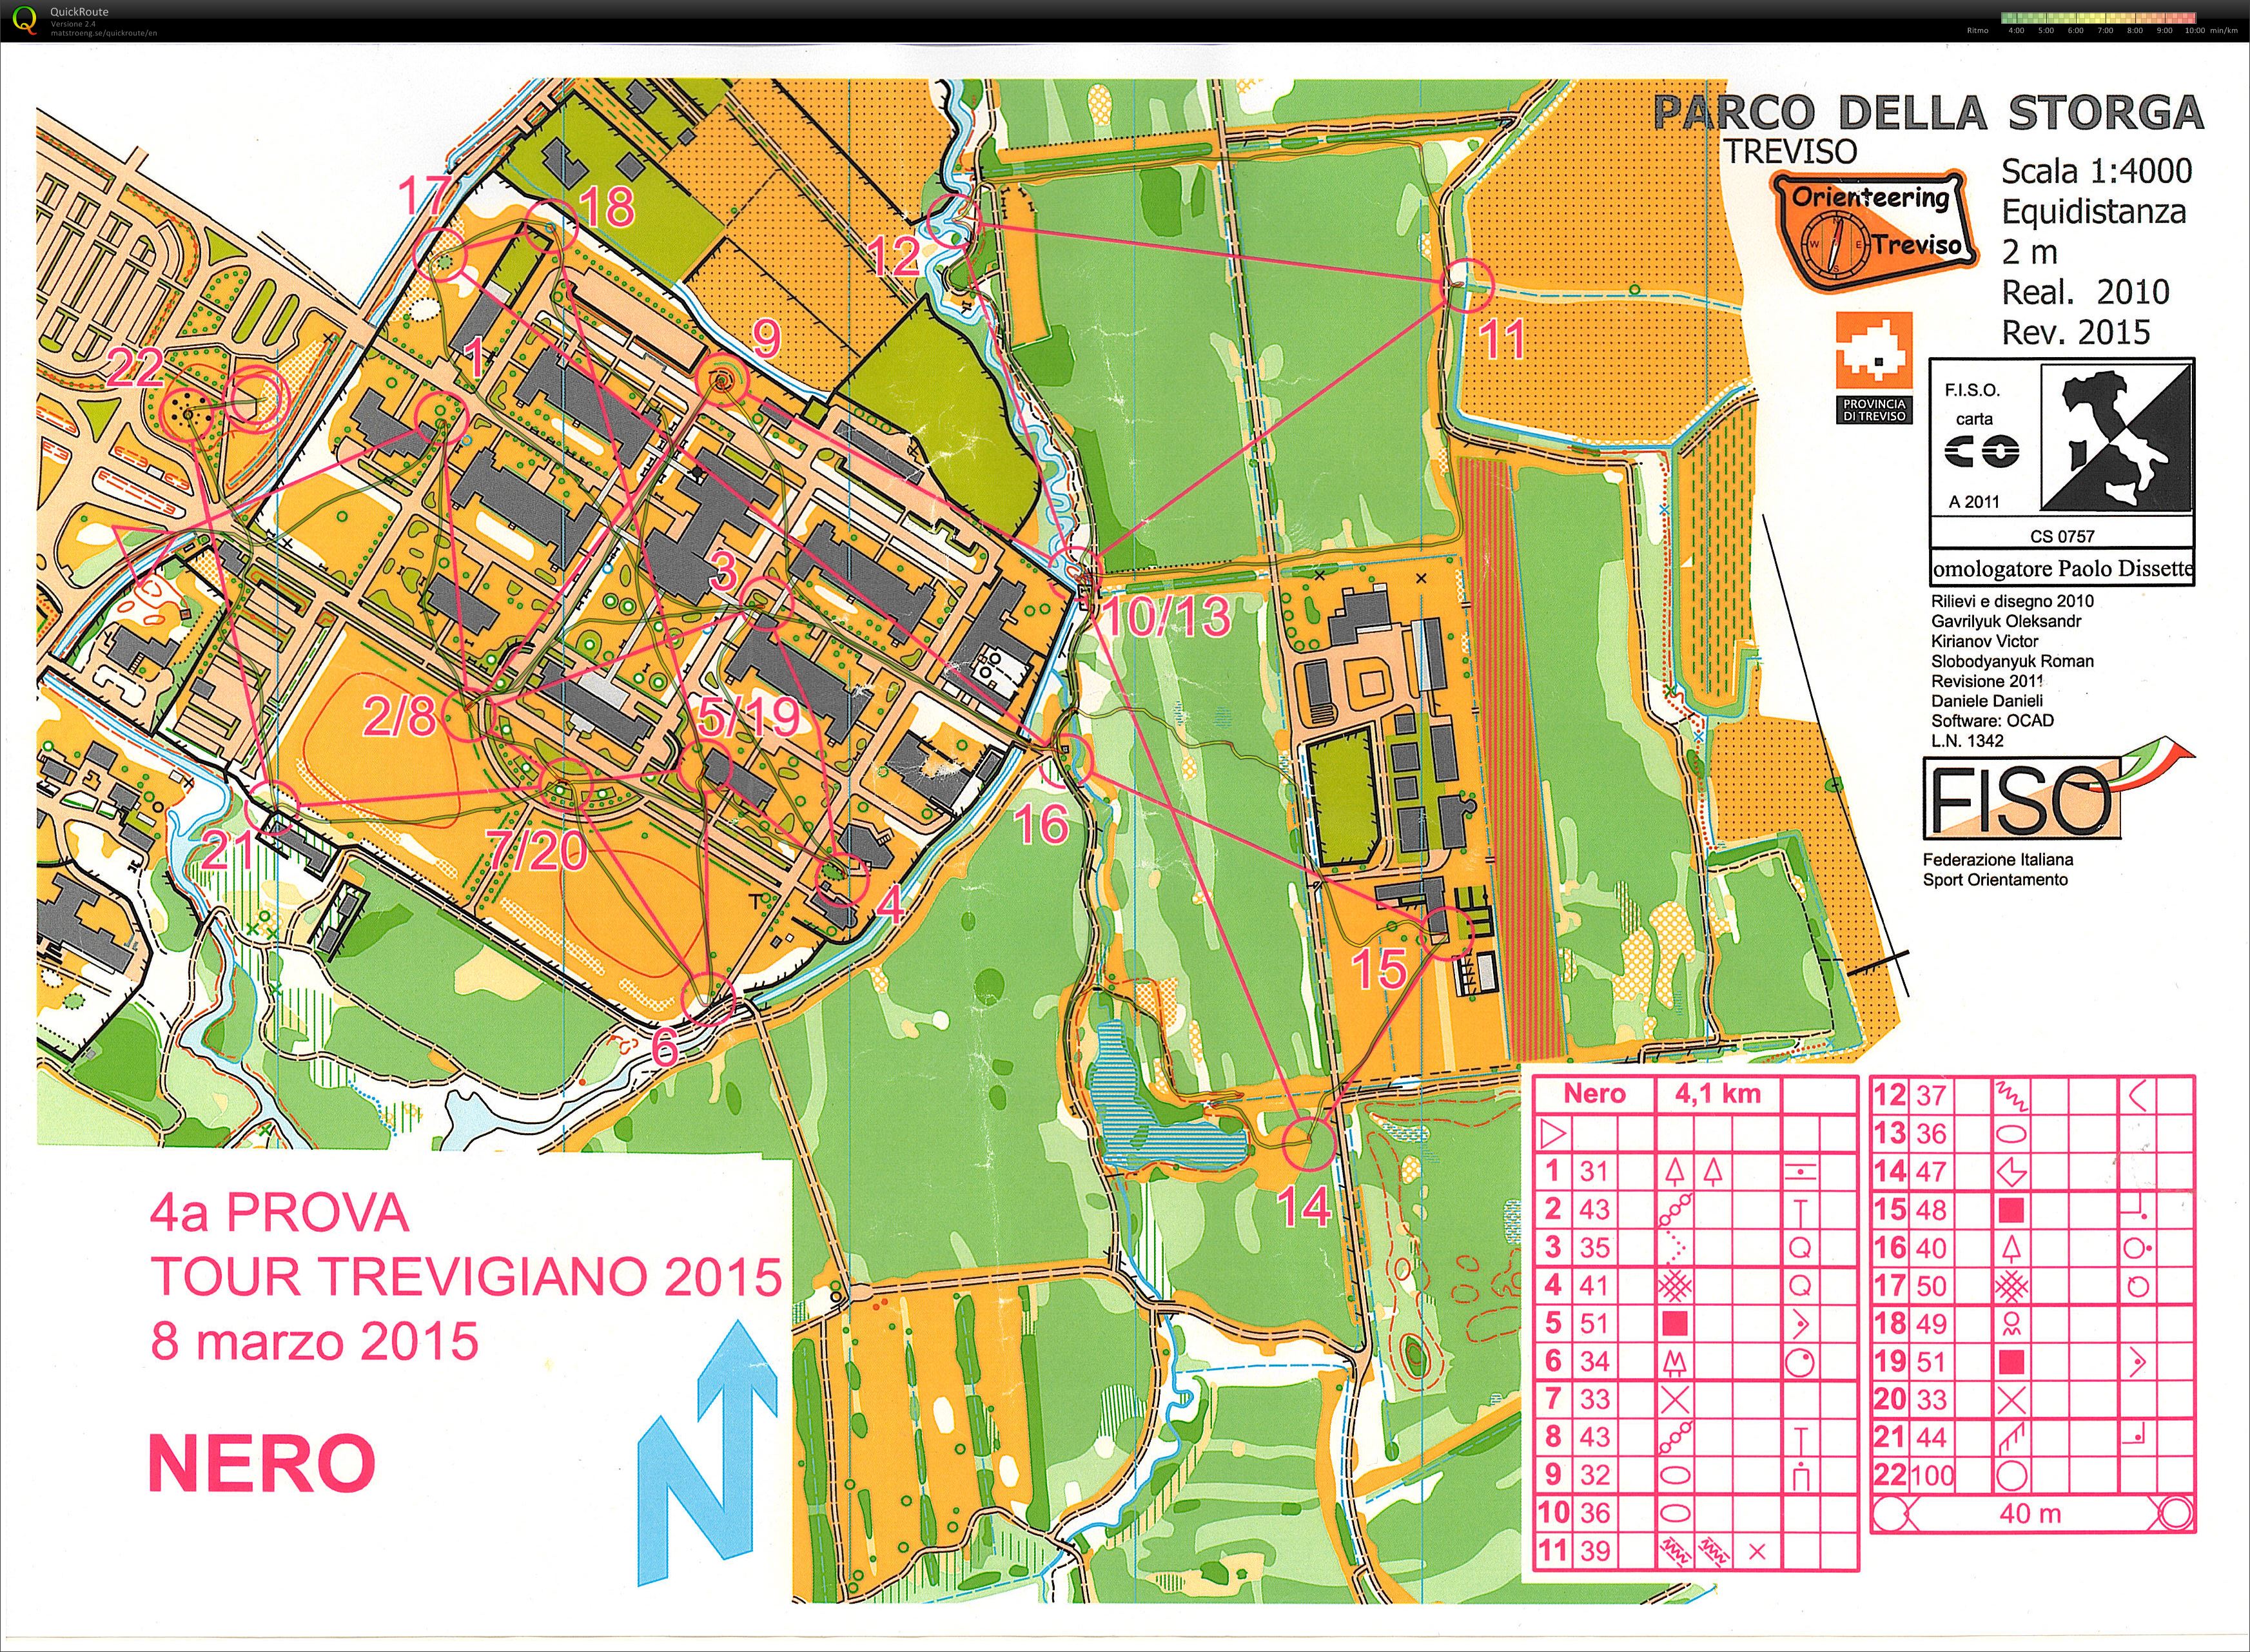 4a prova Tour Trevigiano 2015 (08-03-2015)